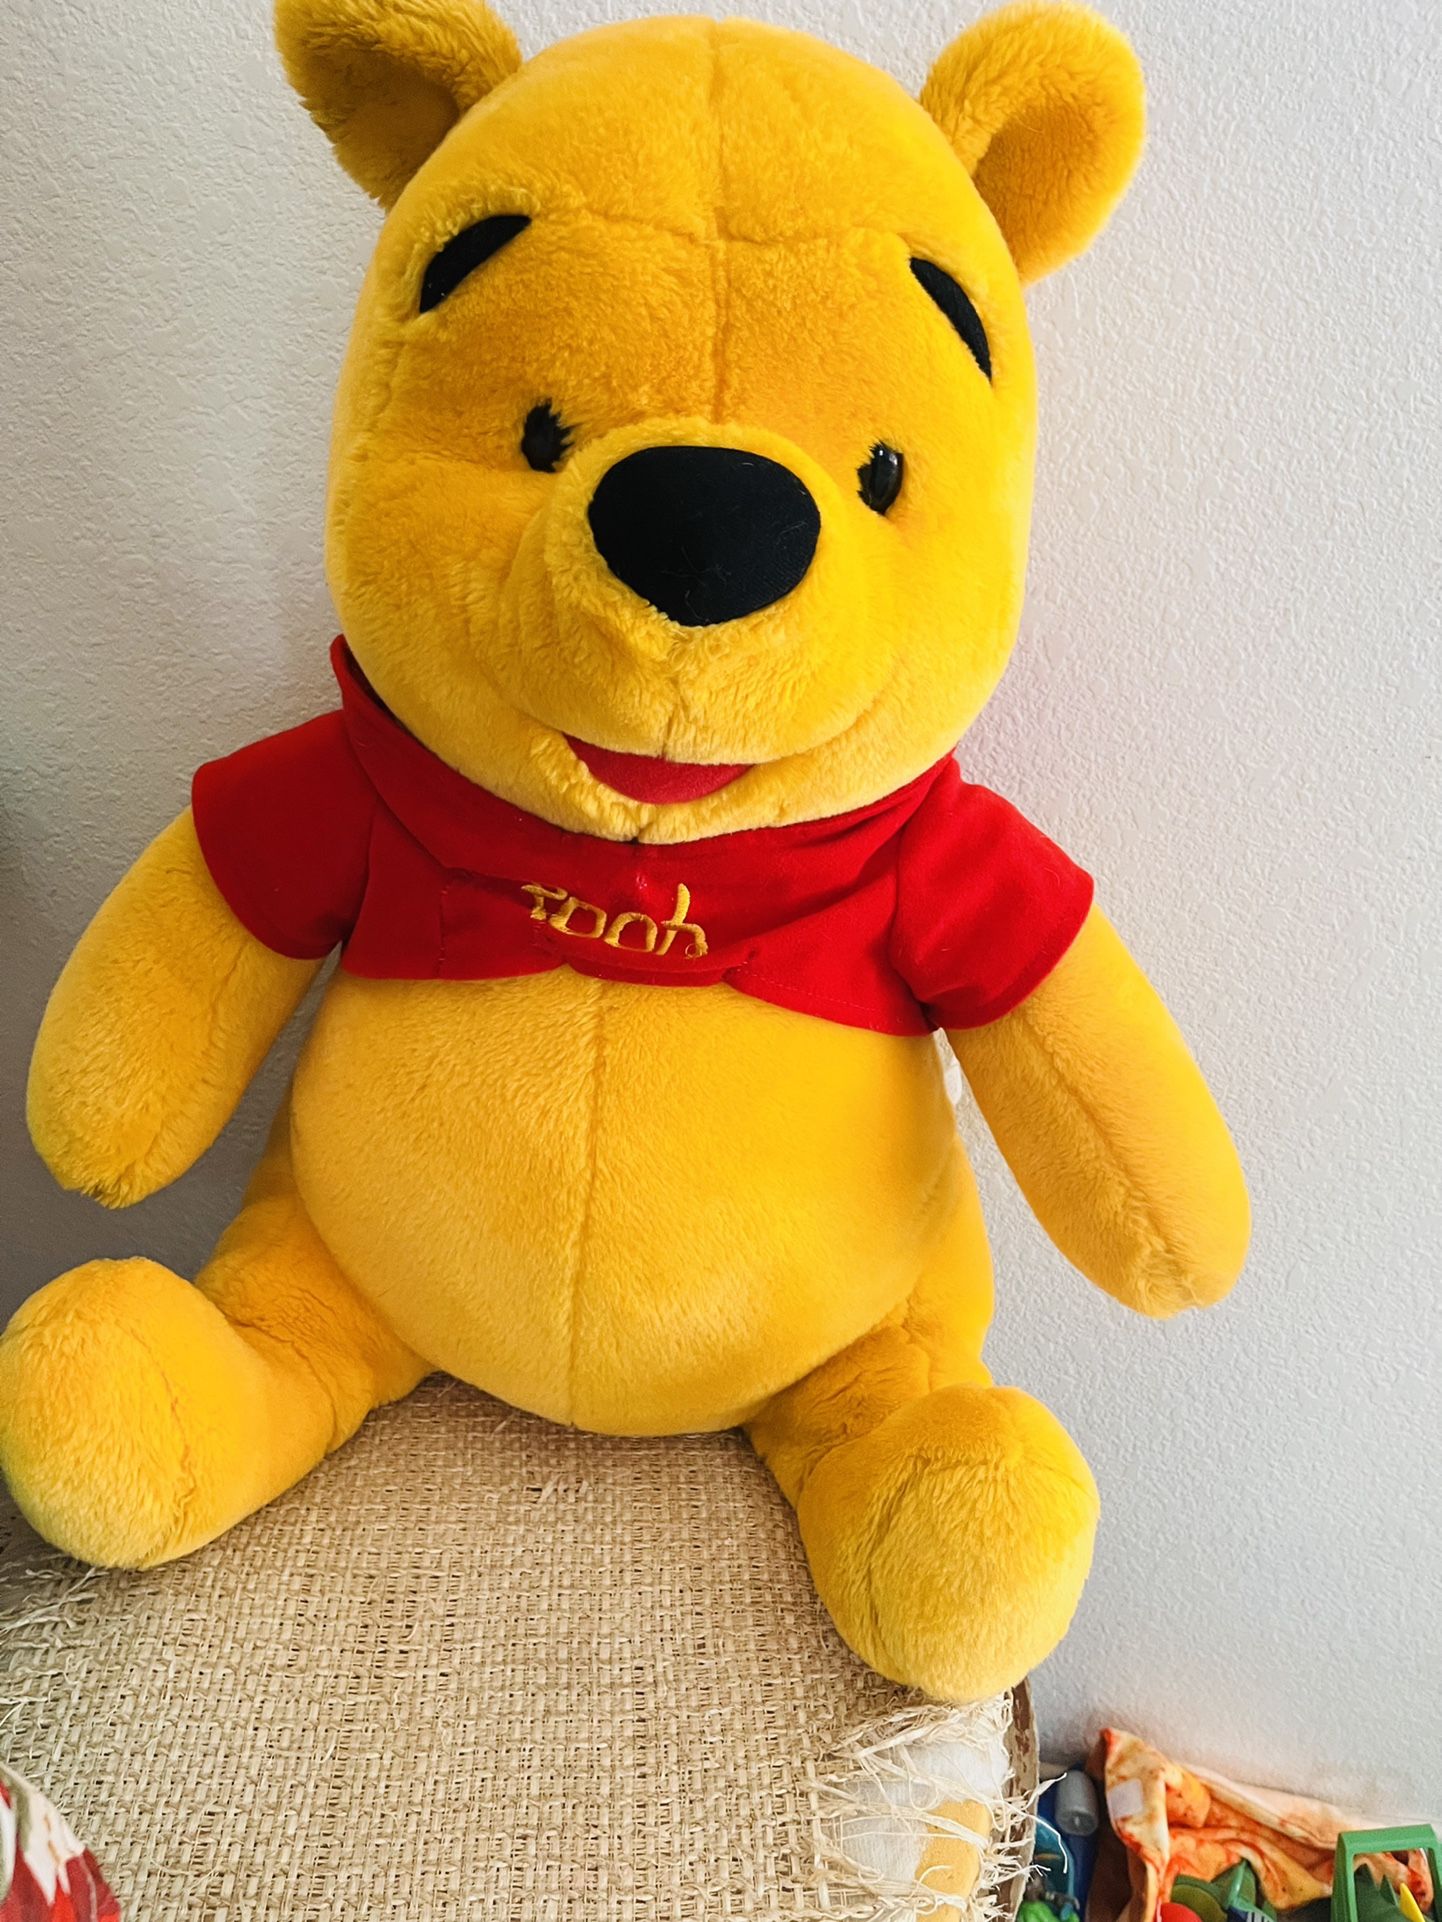 Disney Giant Winnie The Pooh Stuffed Animal 